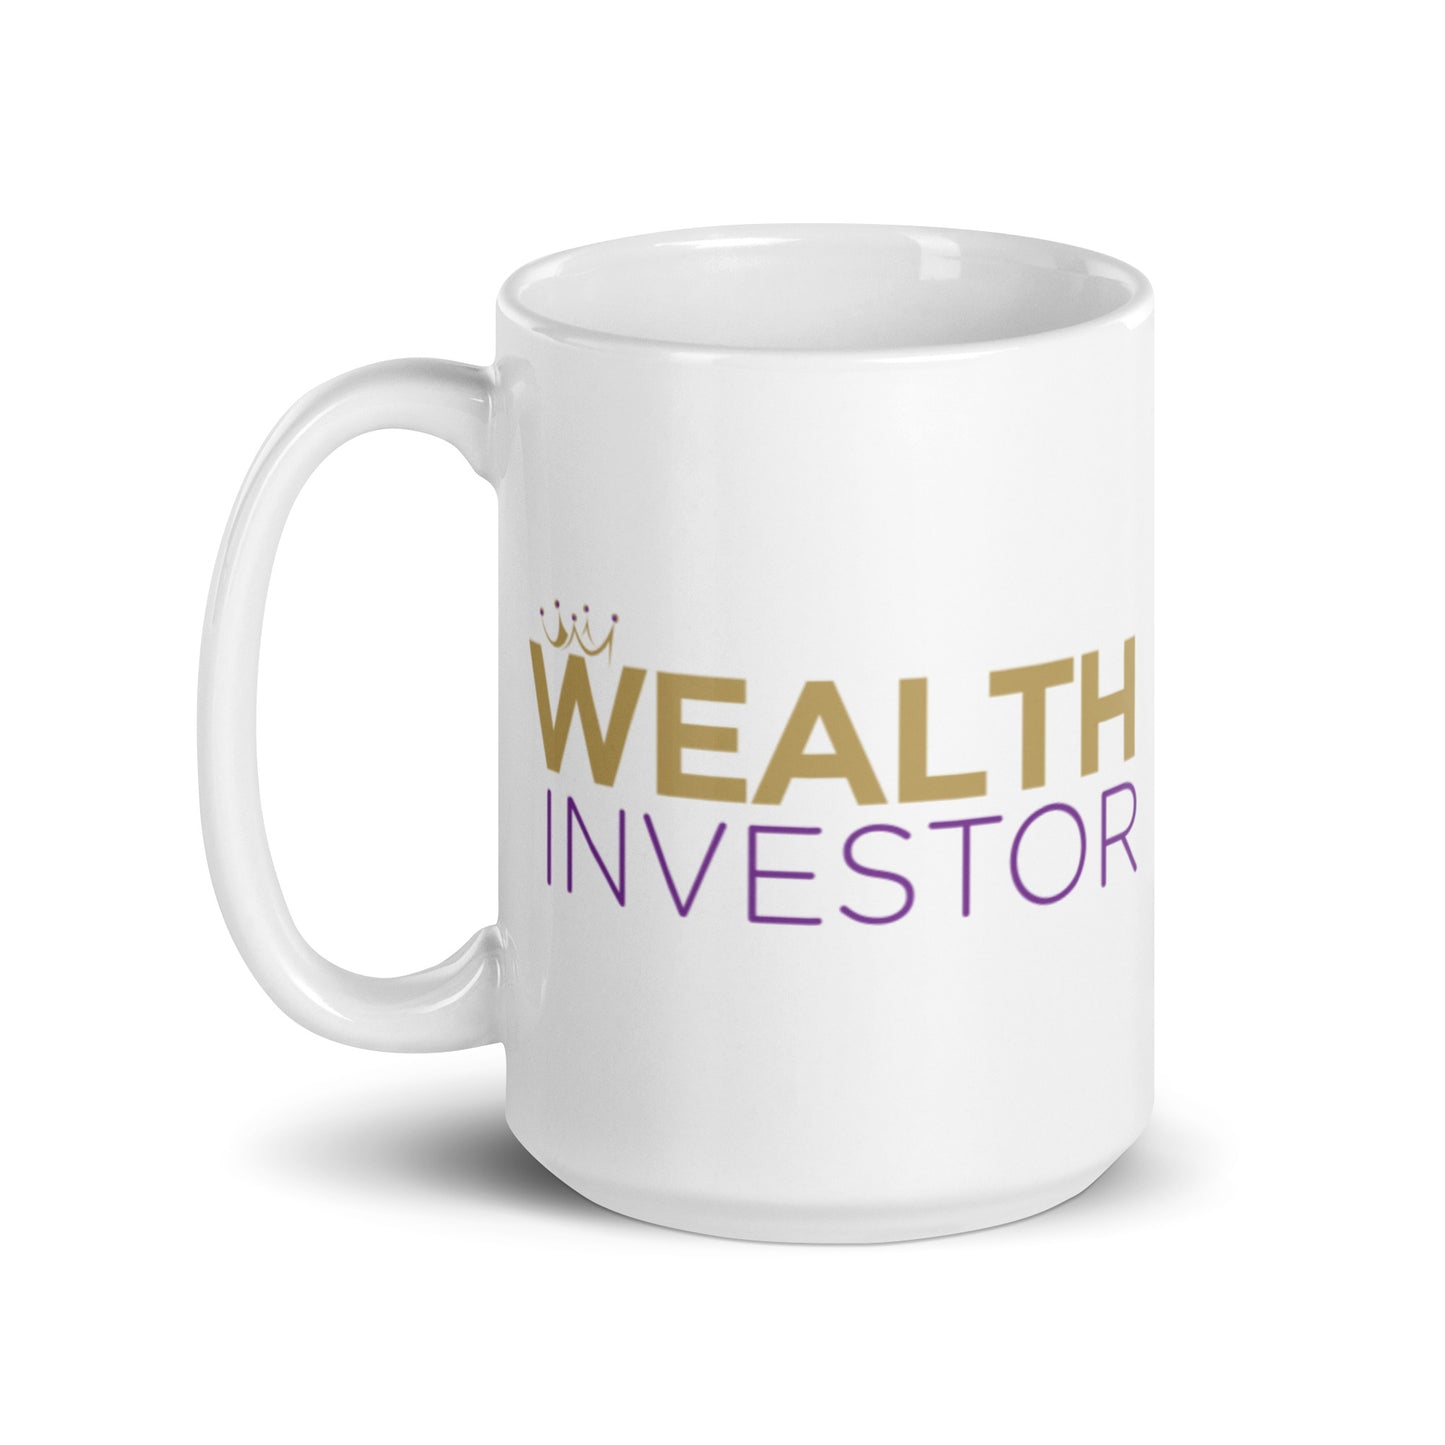 Wealth Investor White glossy mug